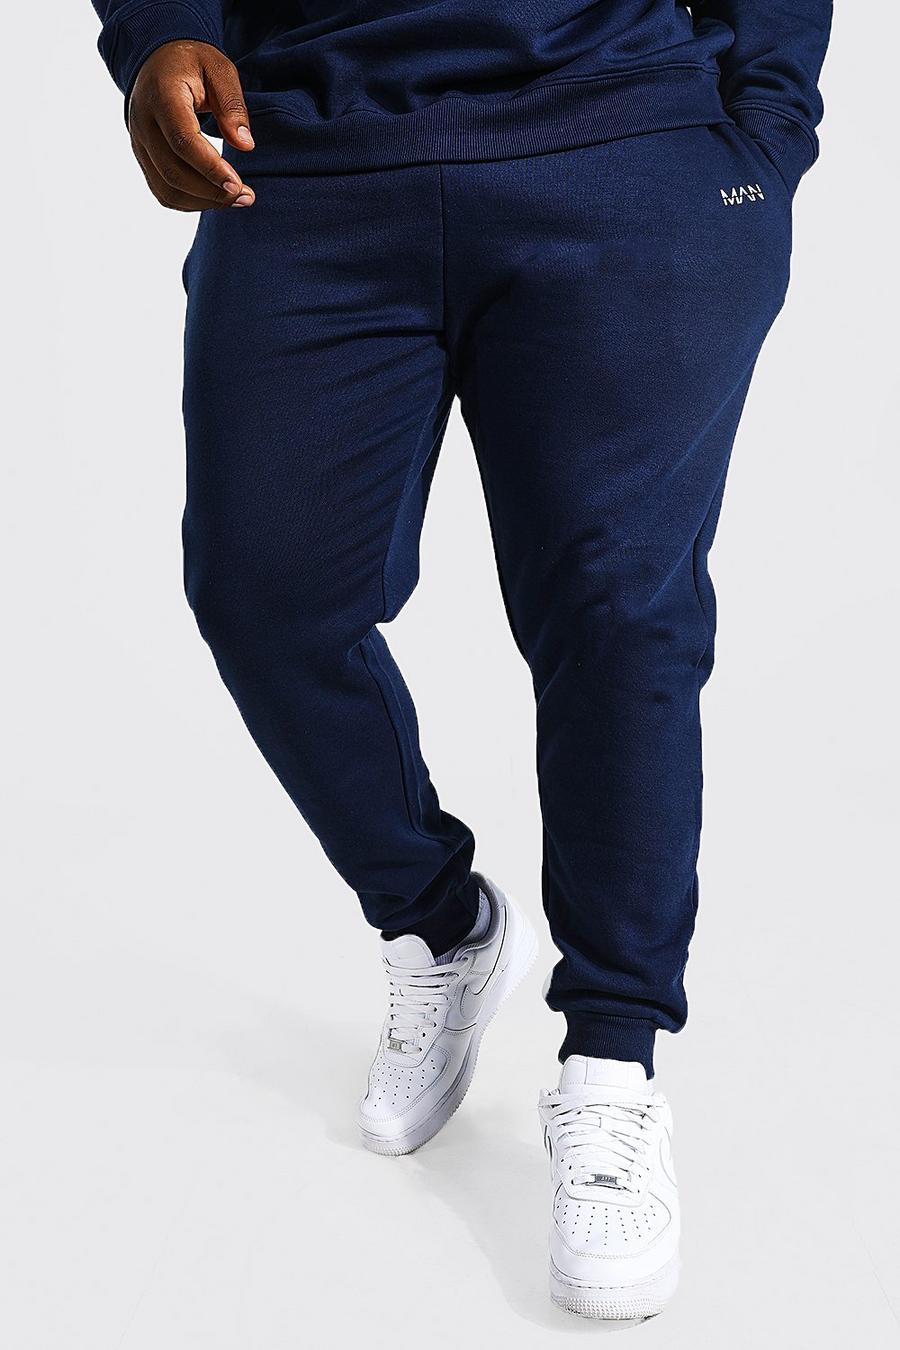 Pantaloni tuta Plus Size Man Dash Skinny Fit in fibre riciclate, Navy blu oltremare